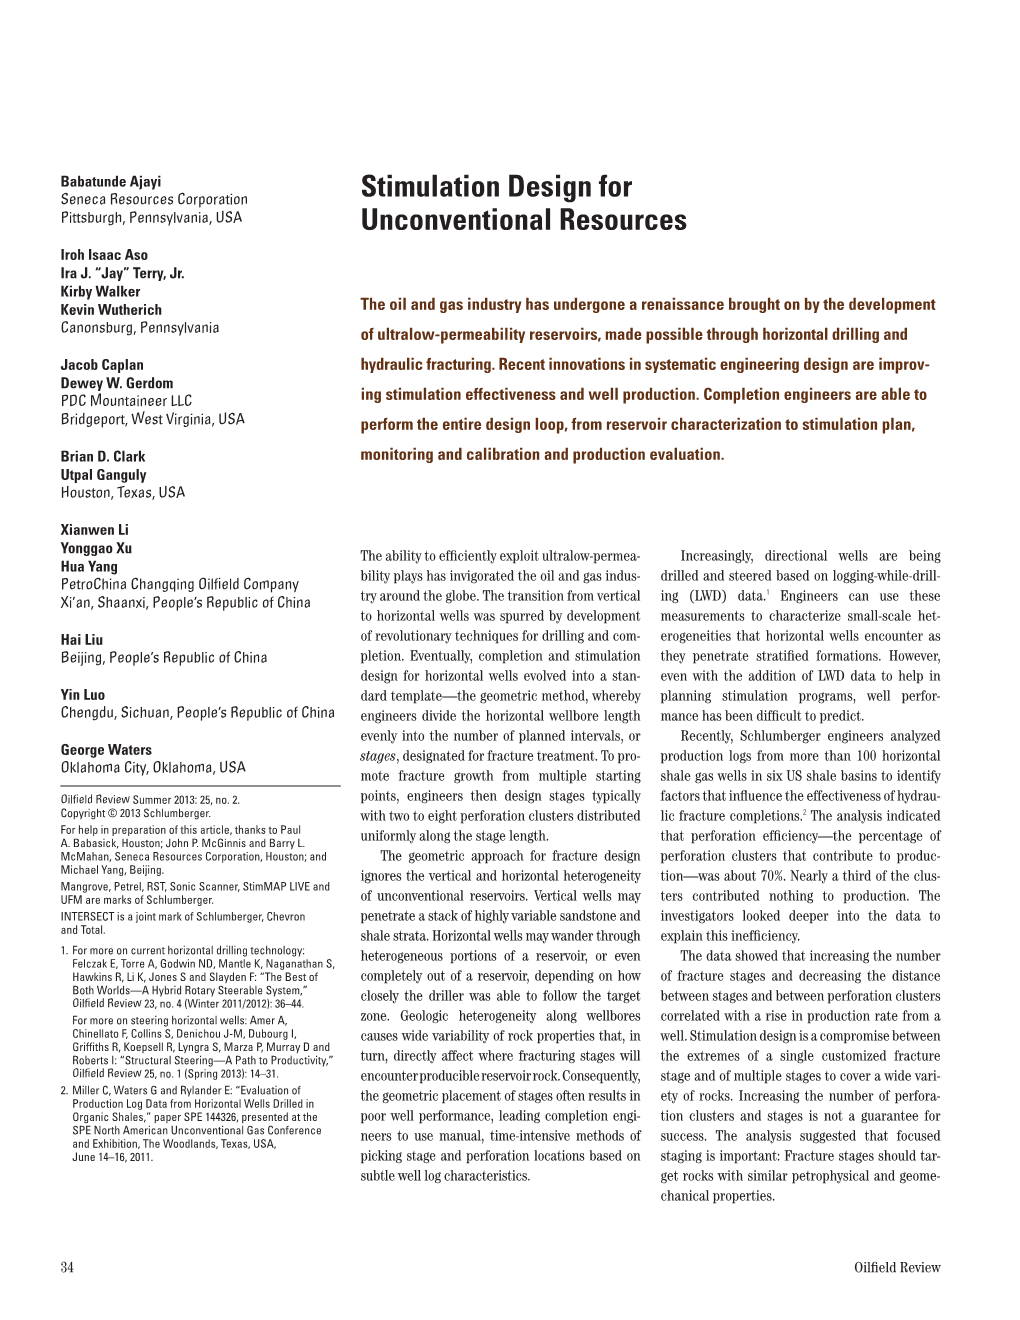 Stimulation Design for Unconventional Resources